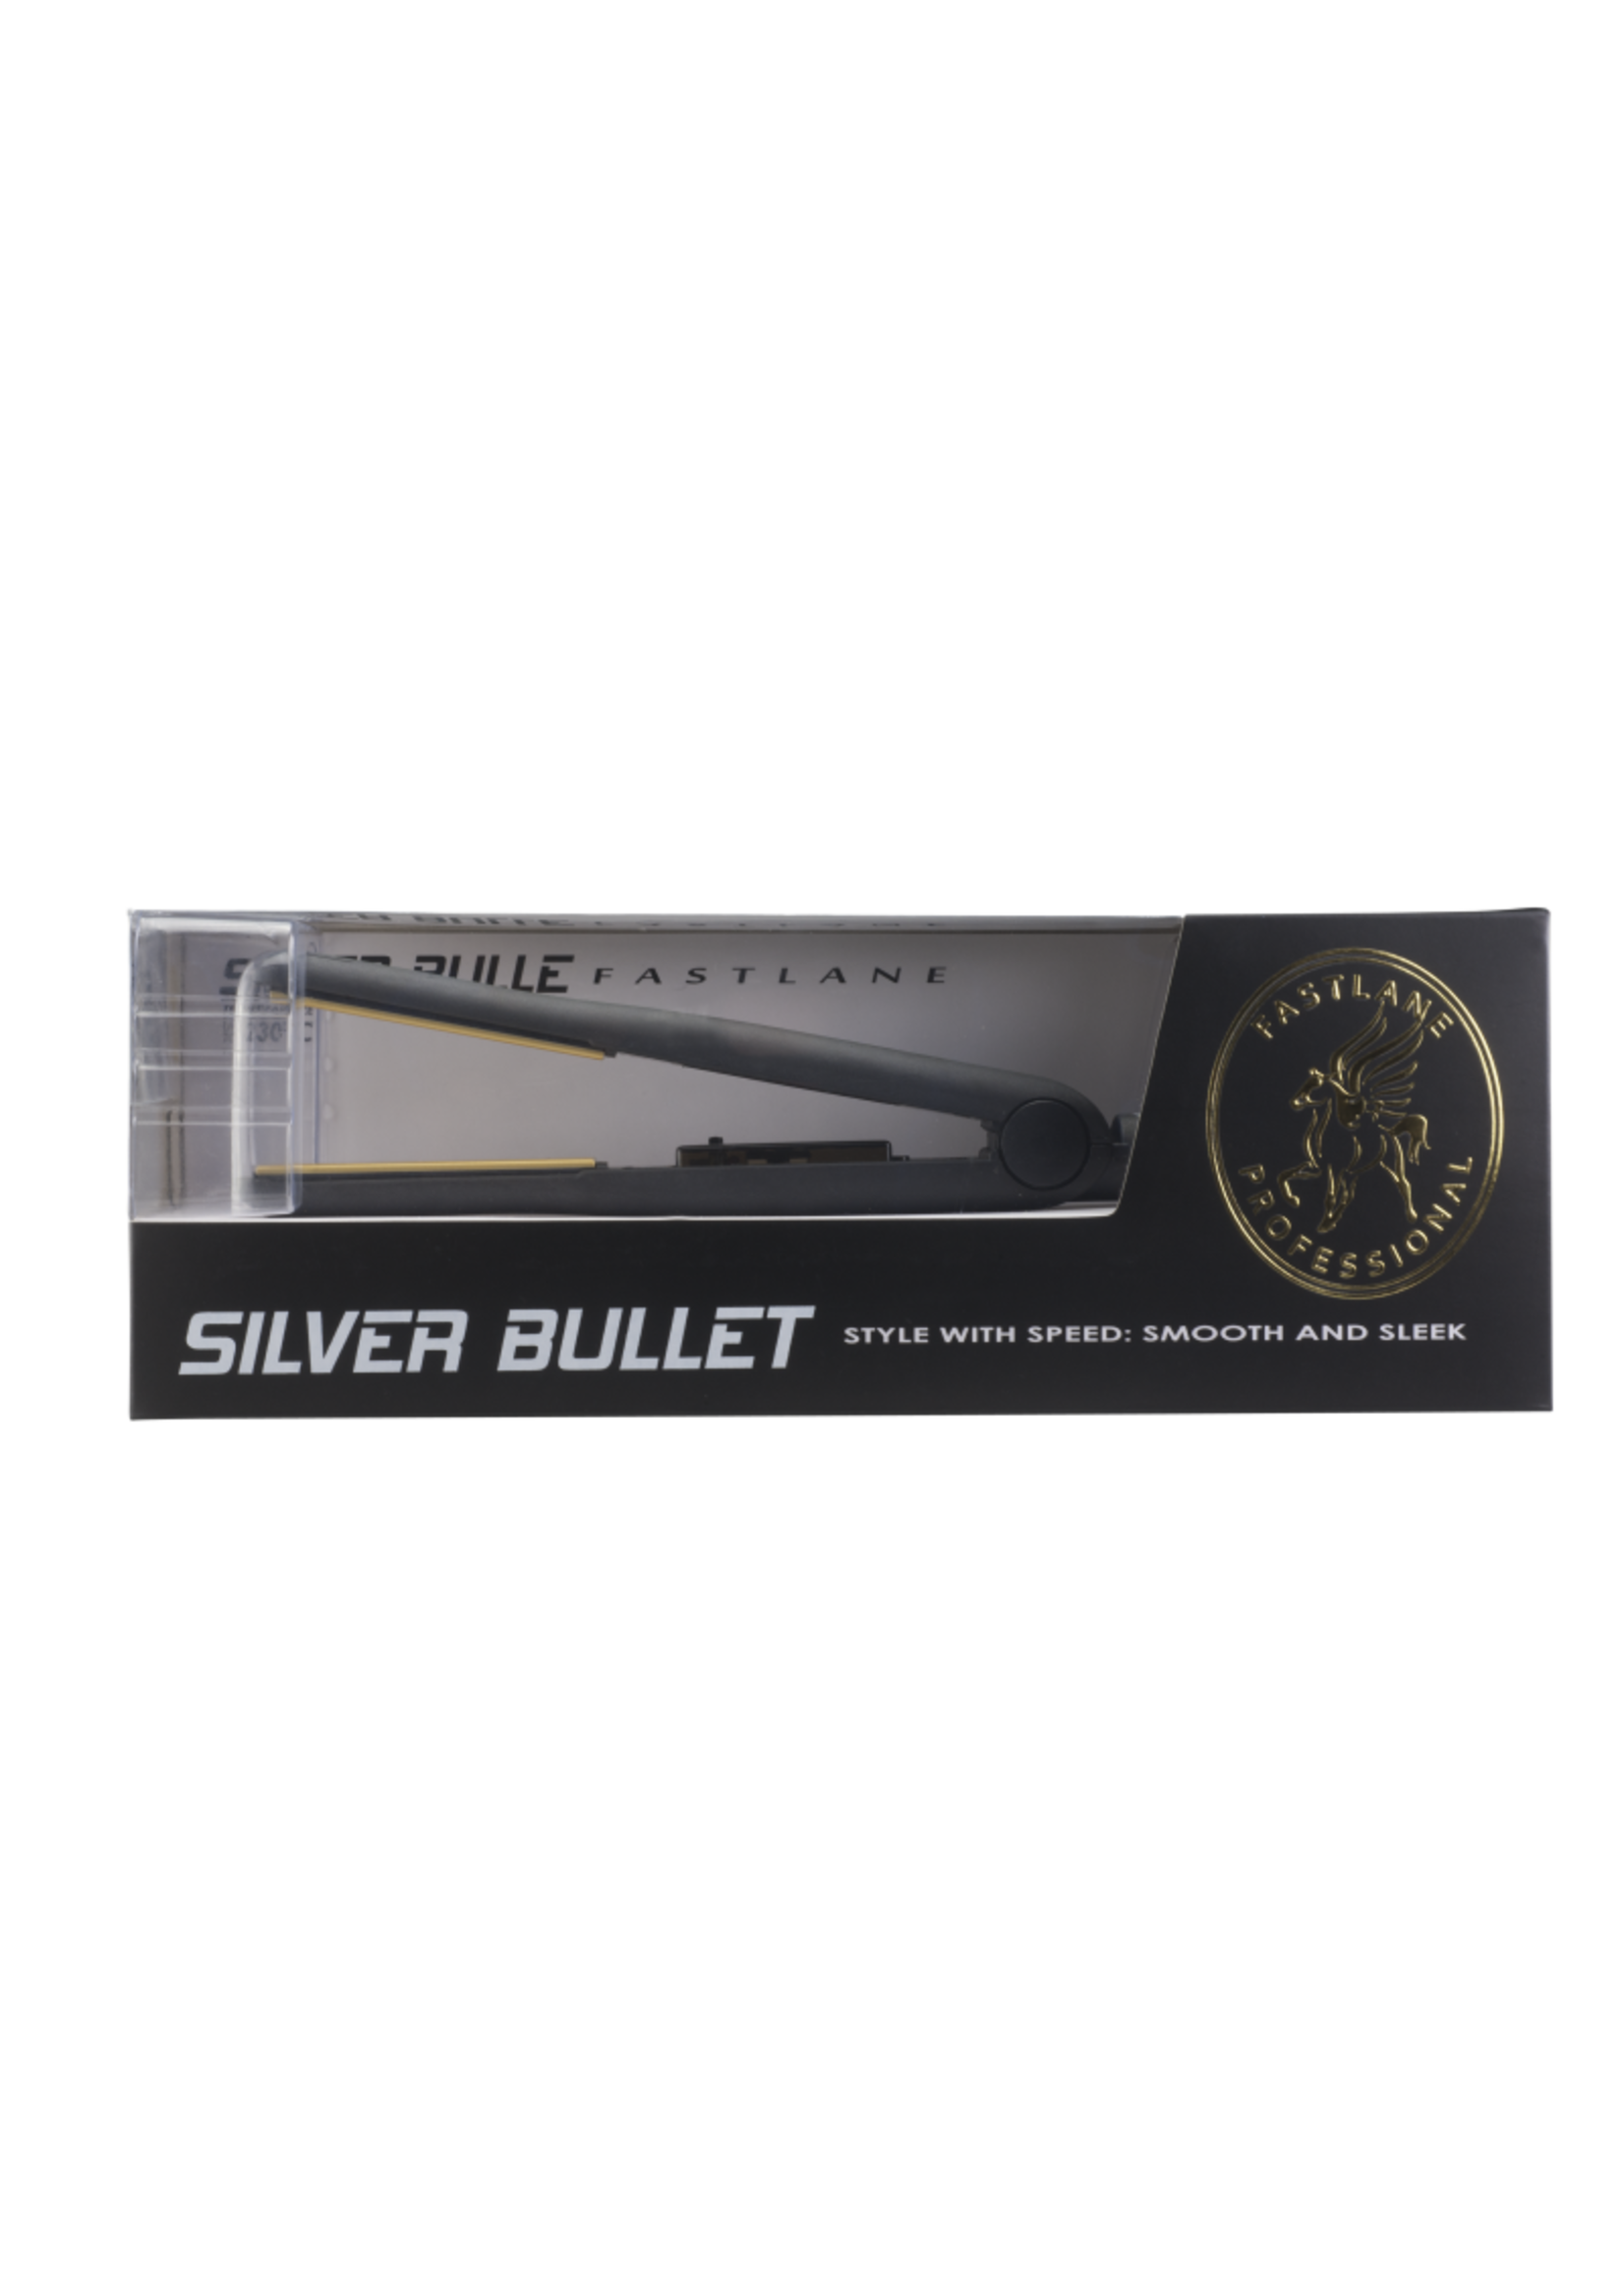 Silver Bullet Silver Bullet Fastlane Ionic Ceramic Straightener